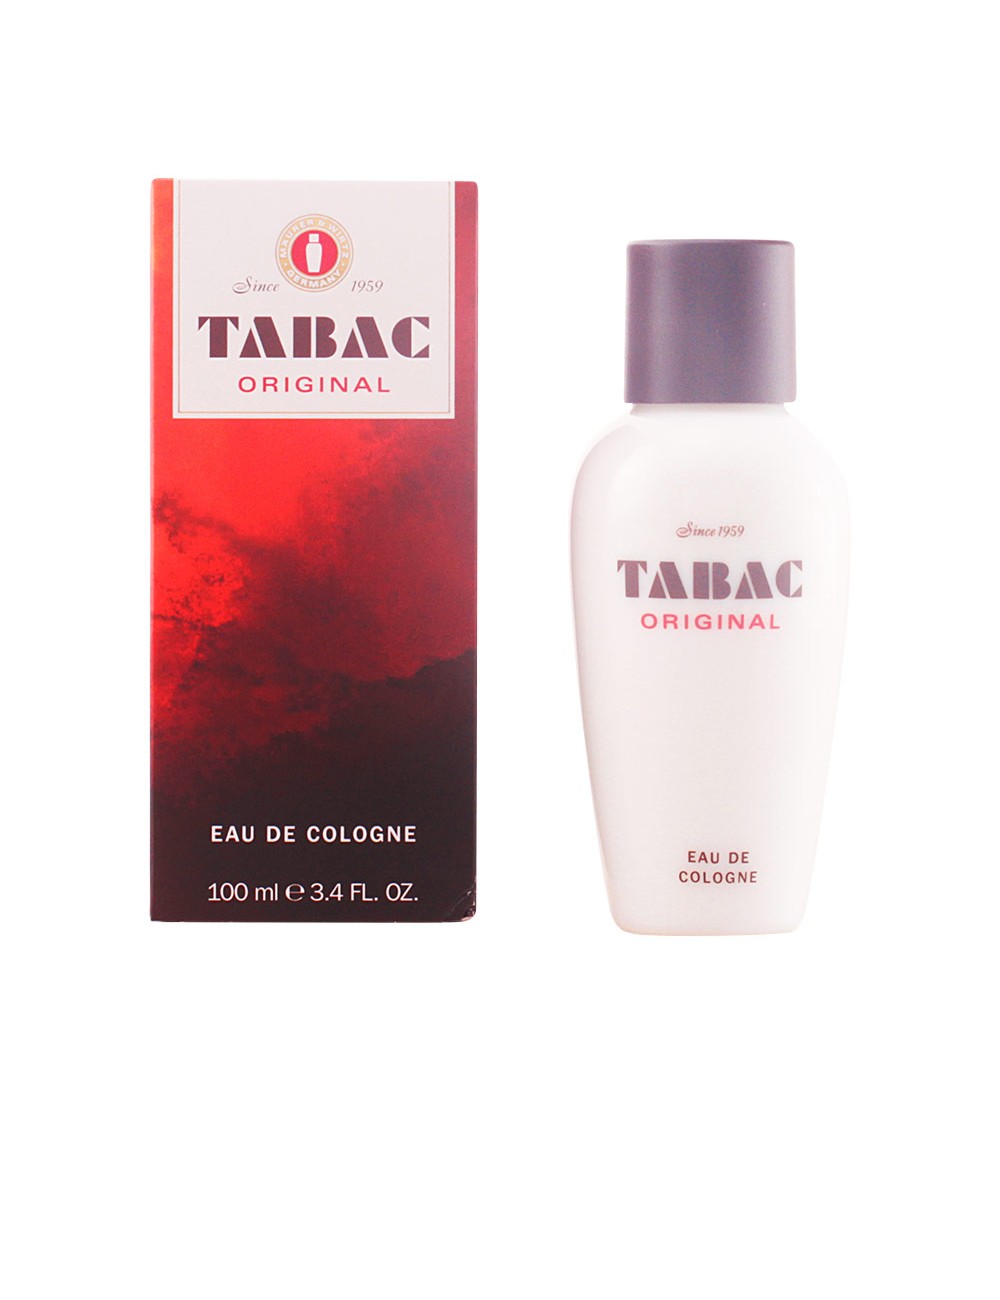 TABAC ORIGINAL eau de cologne flacon 100 ml NE81187